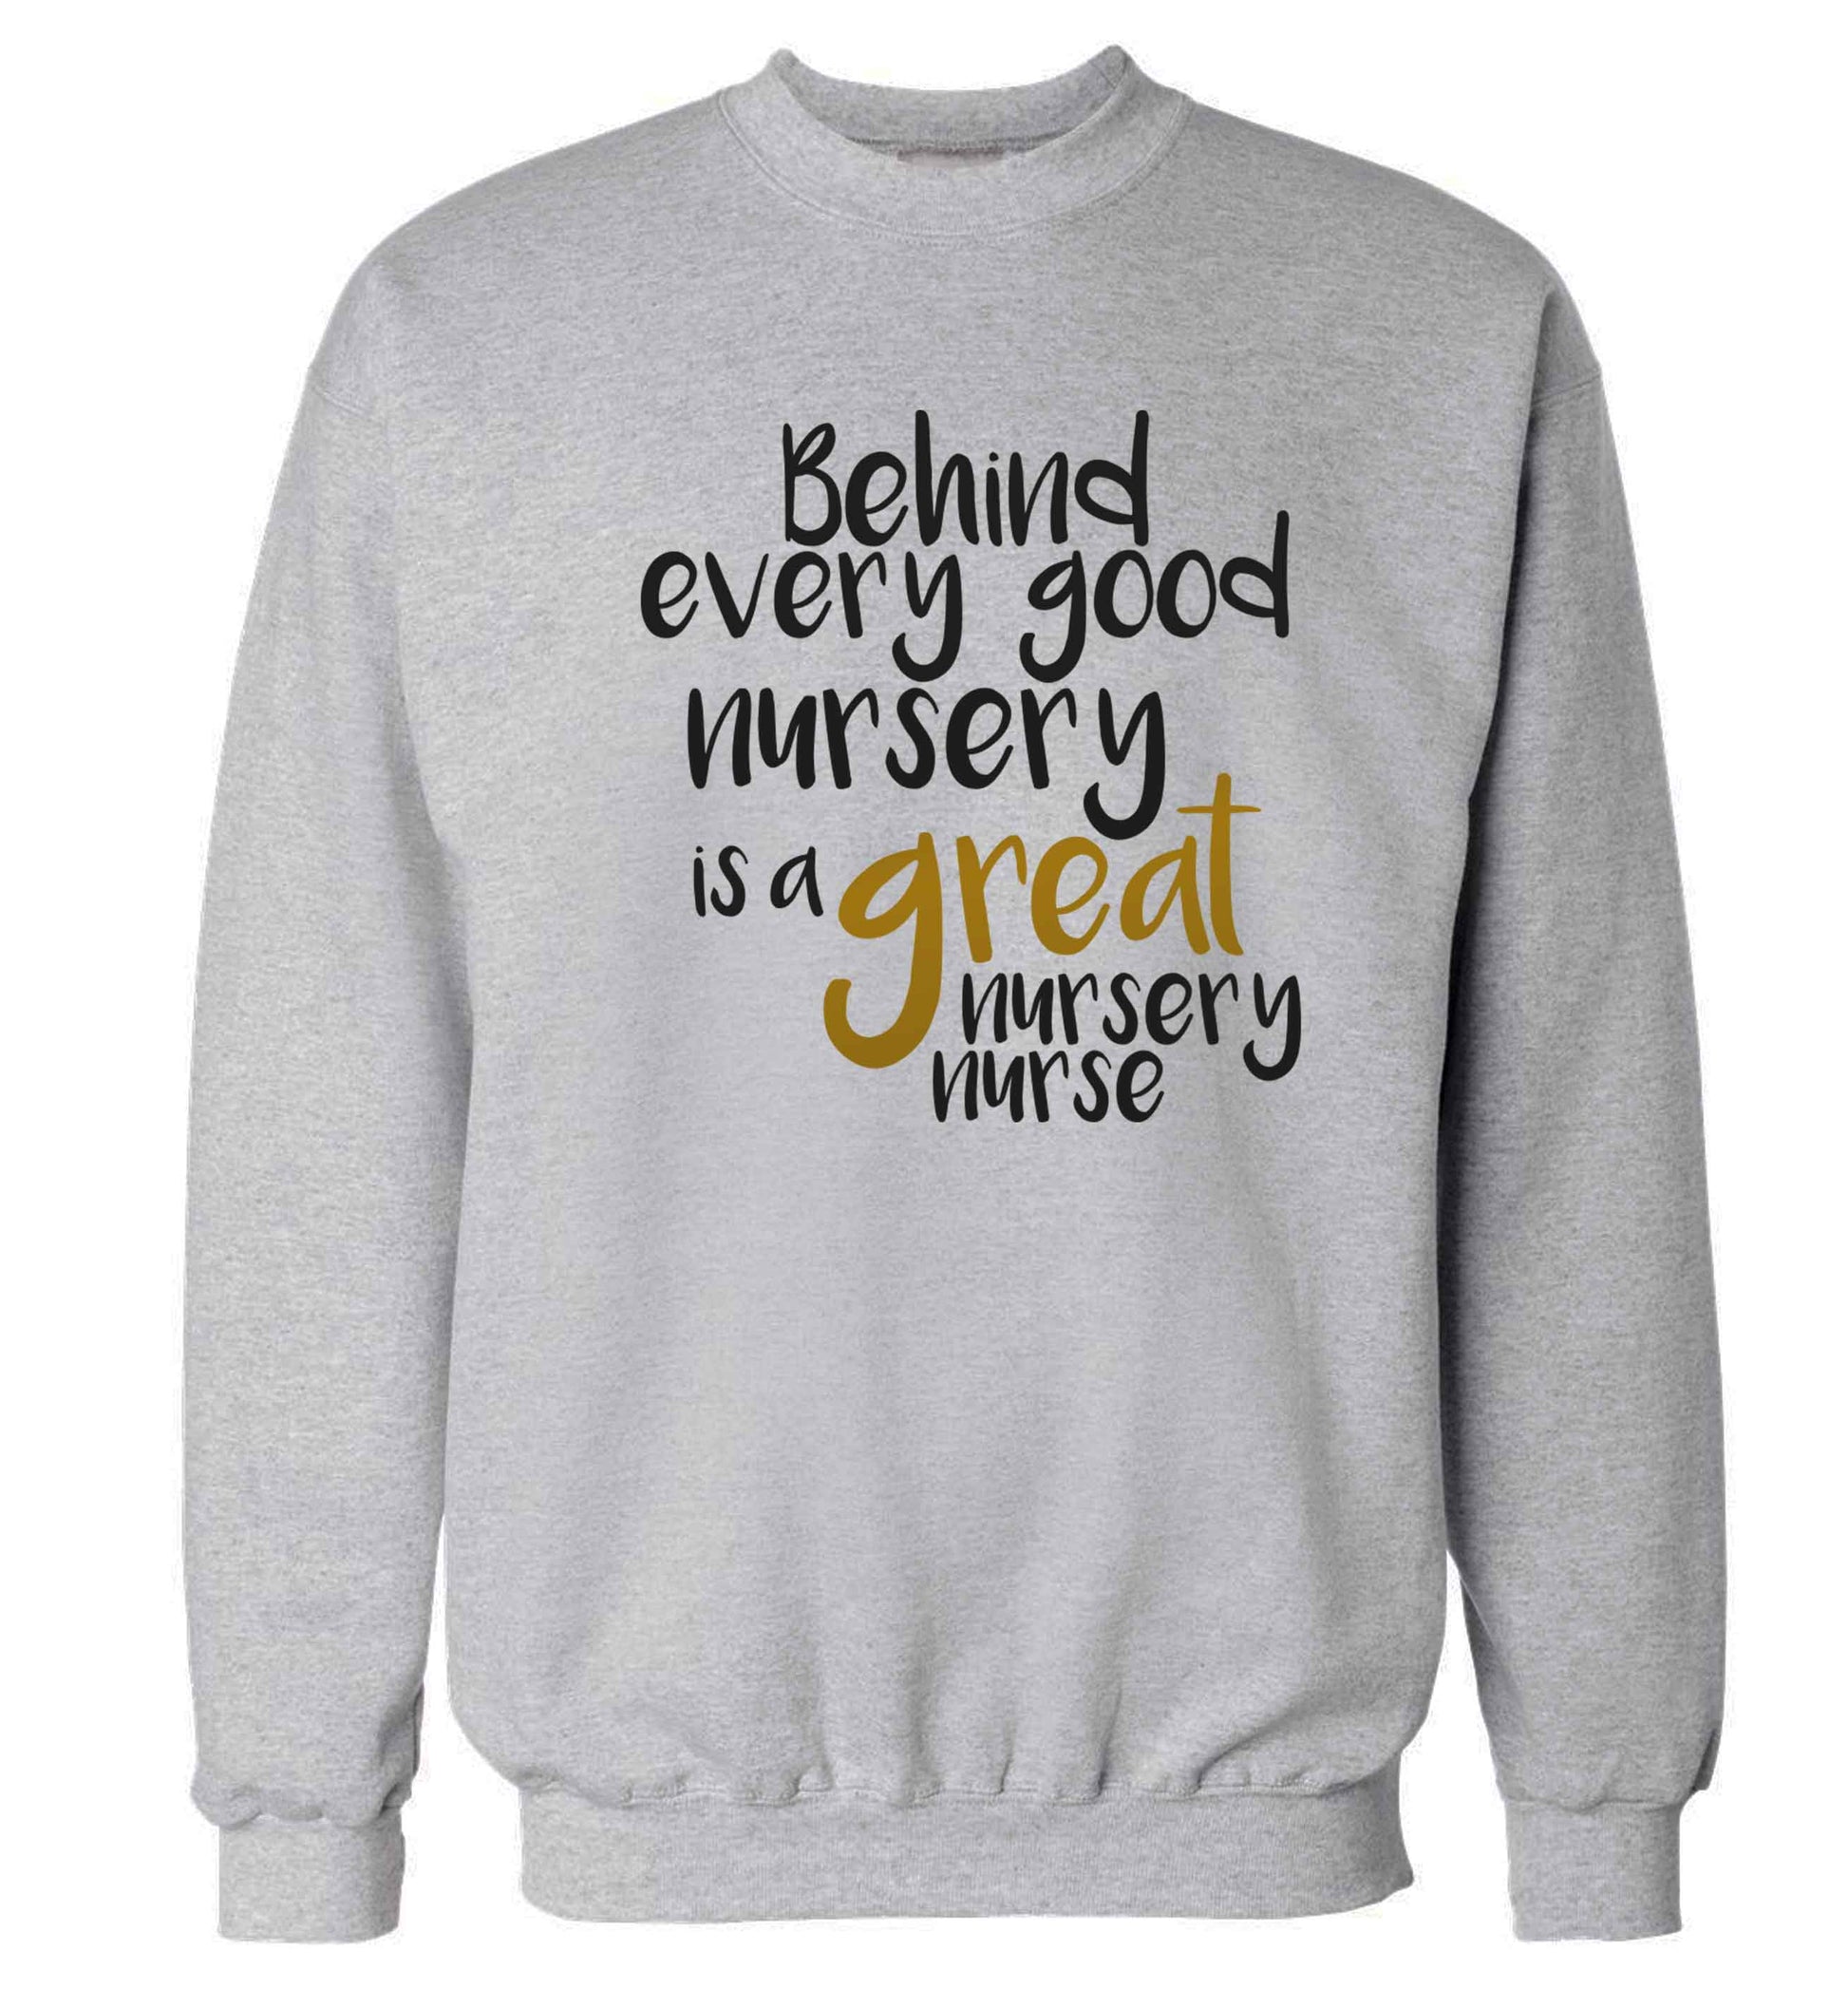 Behind every good nursery is a great nursery nurse Adult's unisex grey Sweater 2XL